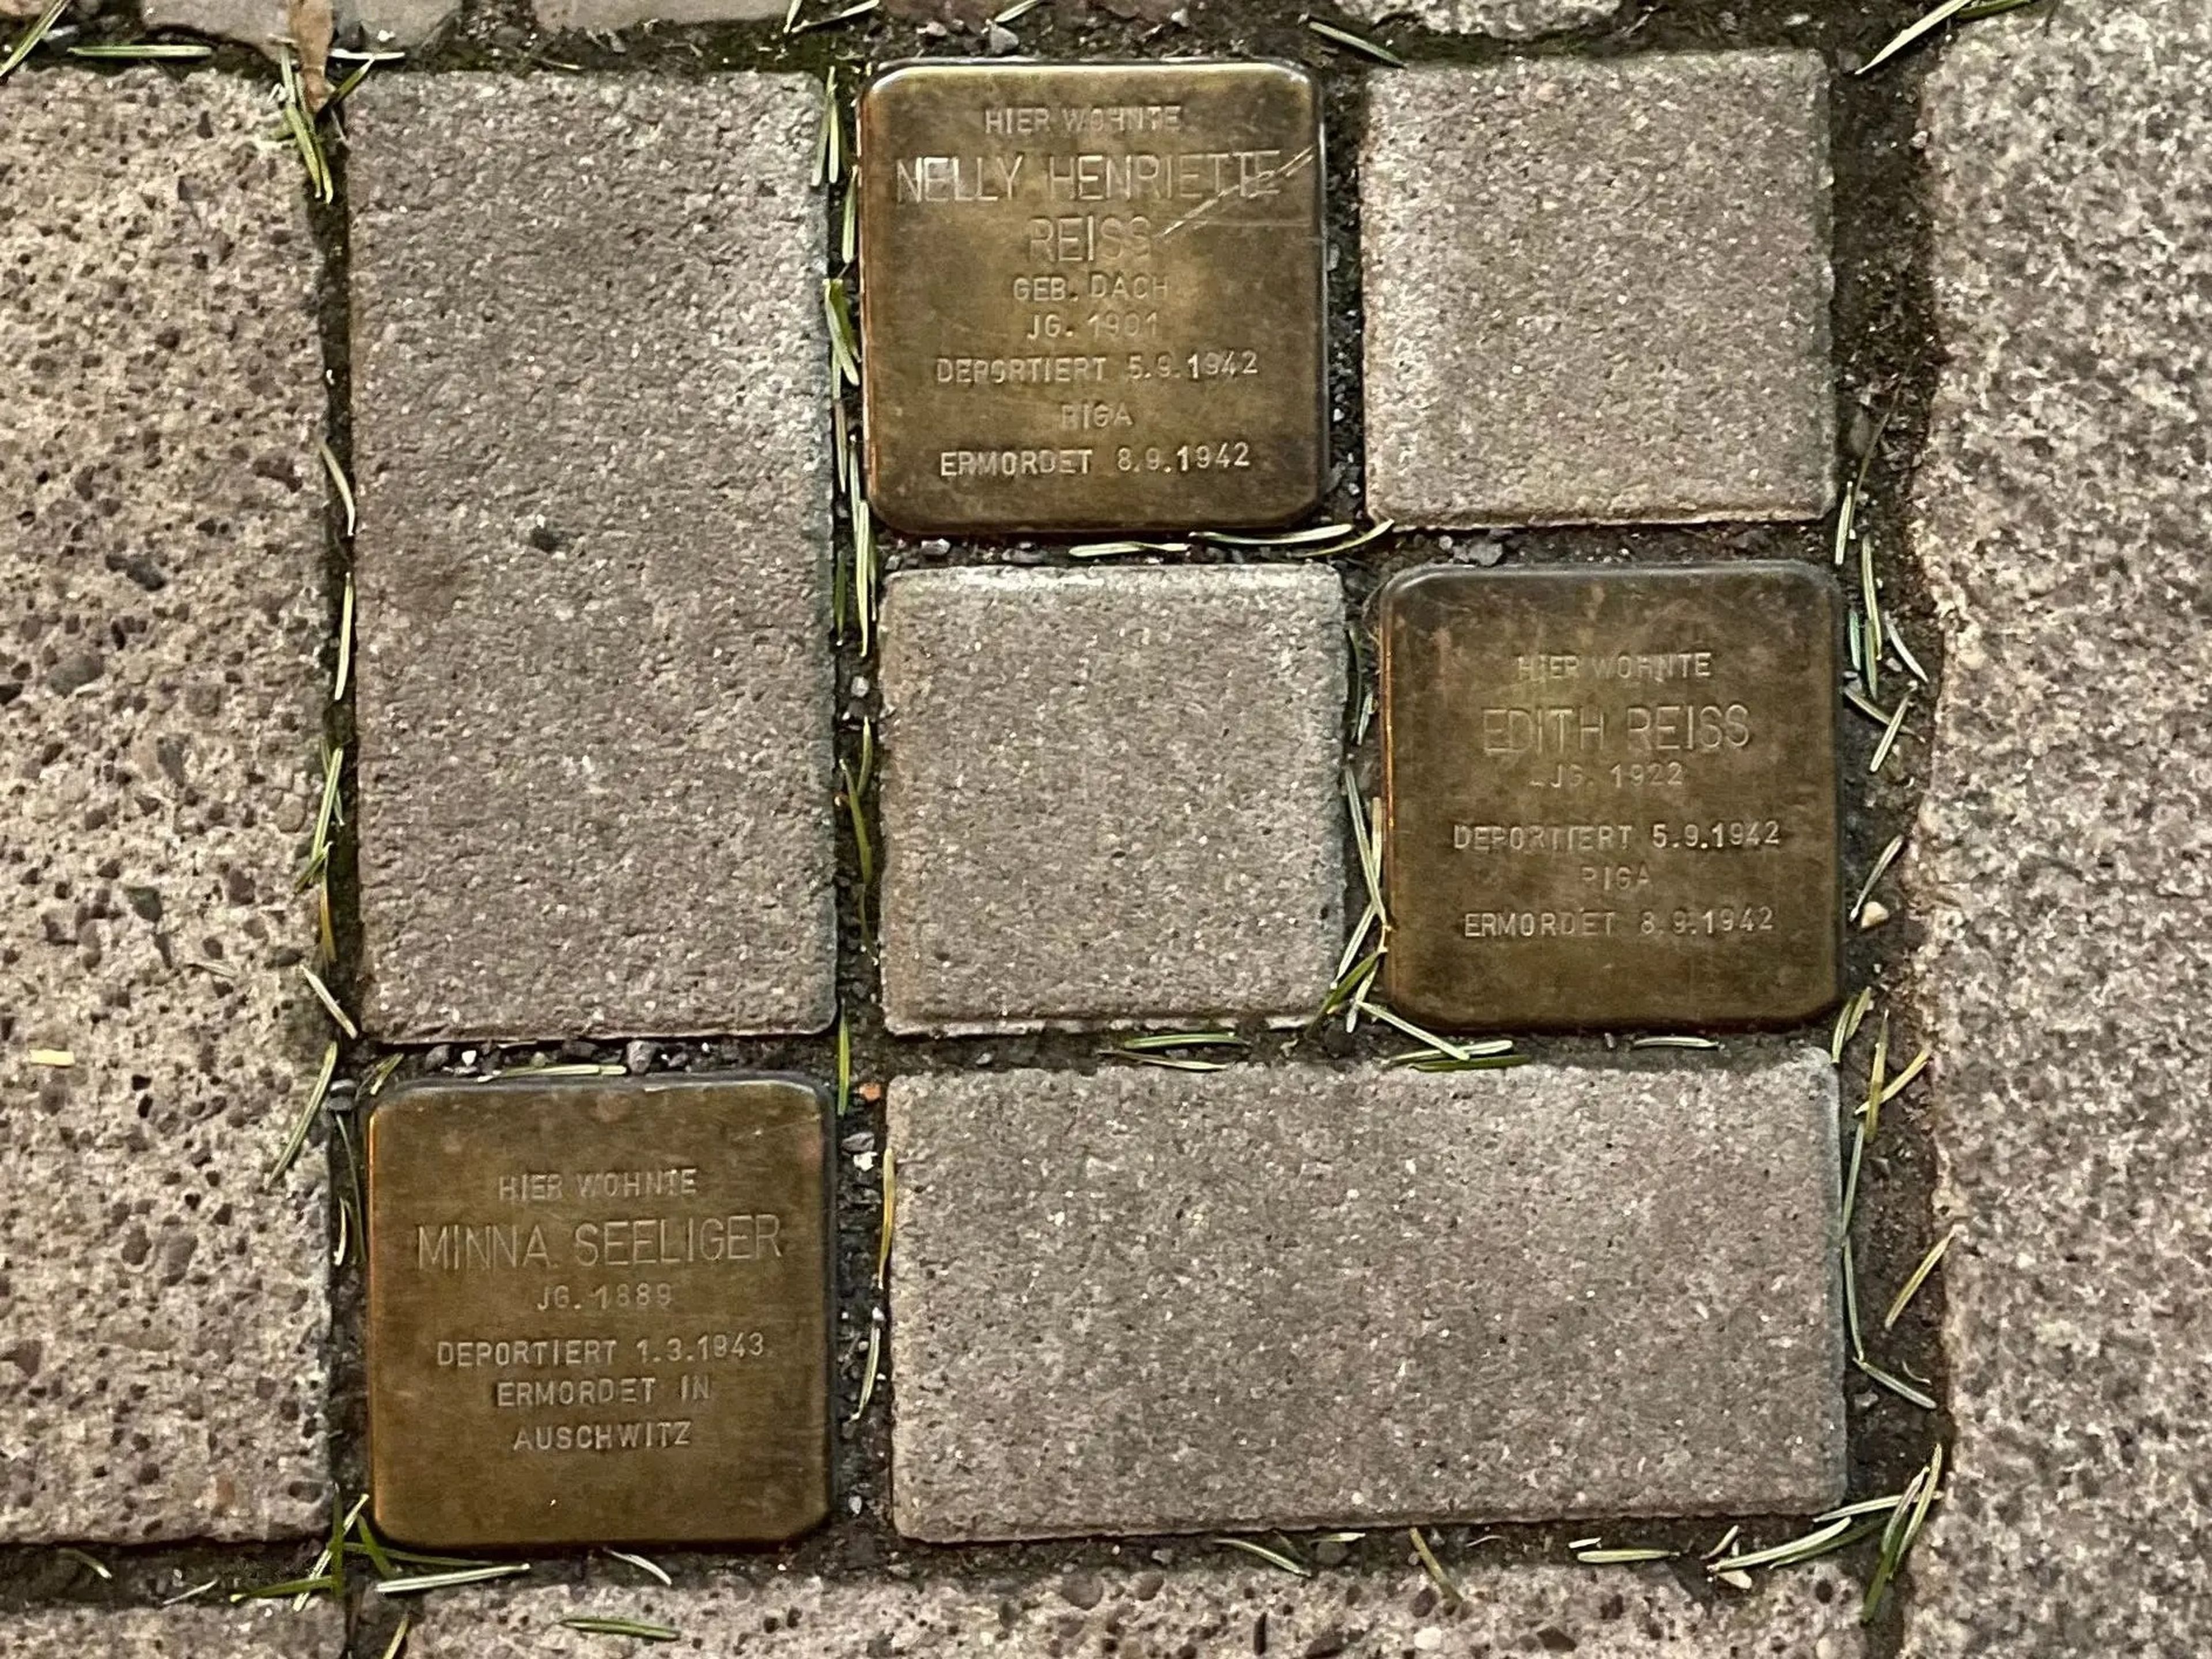 stumbling stone memorializing holocaust victims in berlin